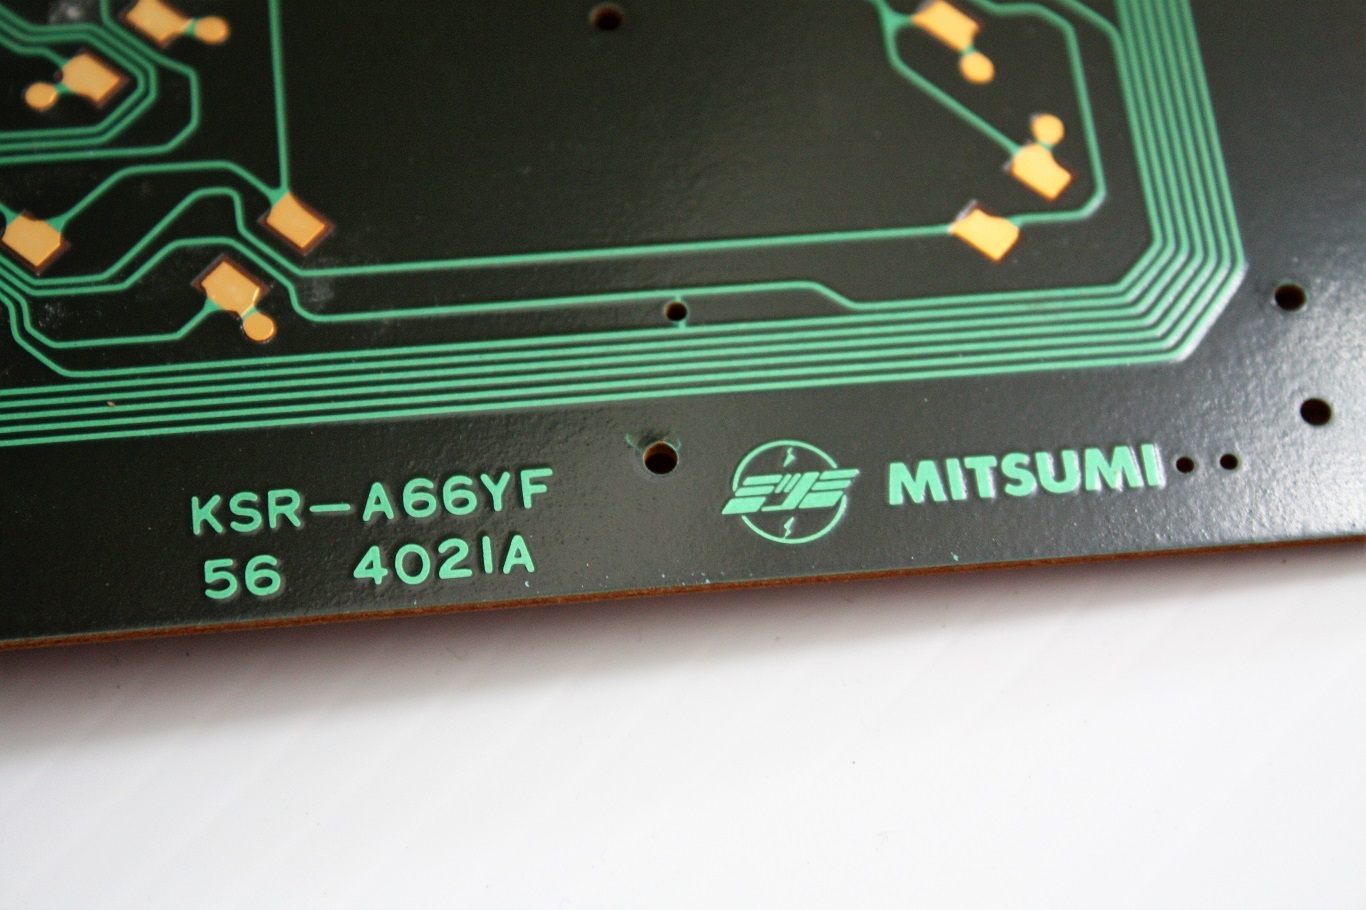 Educator 64 - Mitsumi KSR-A66YF keyboard PCB markings